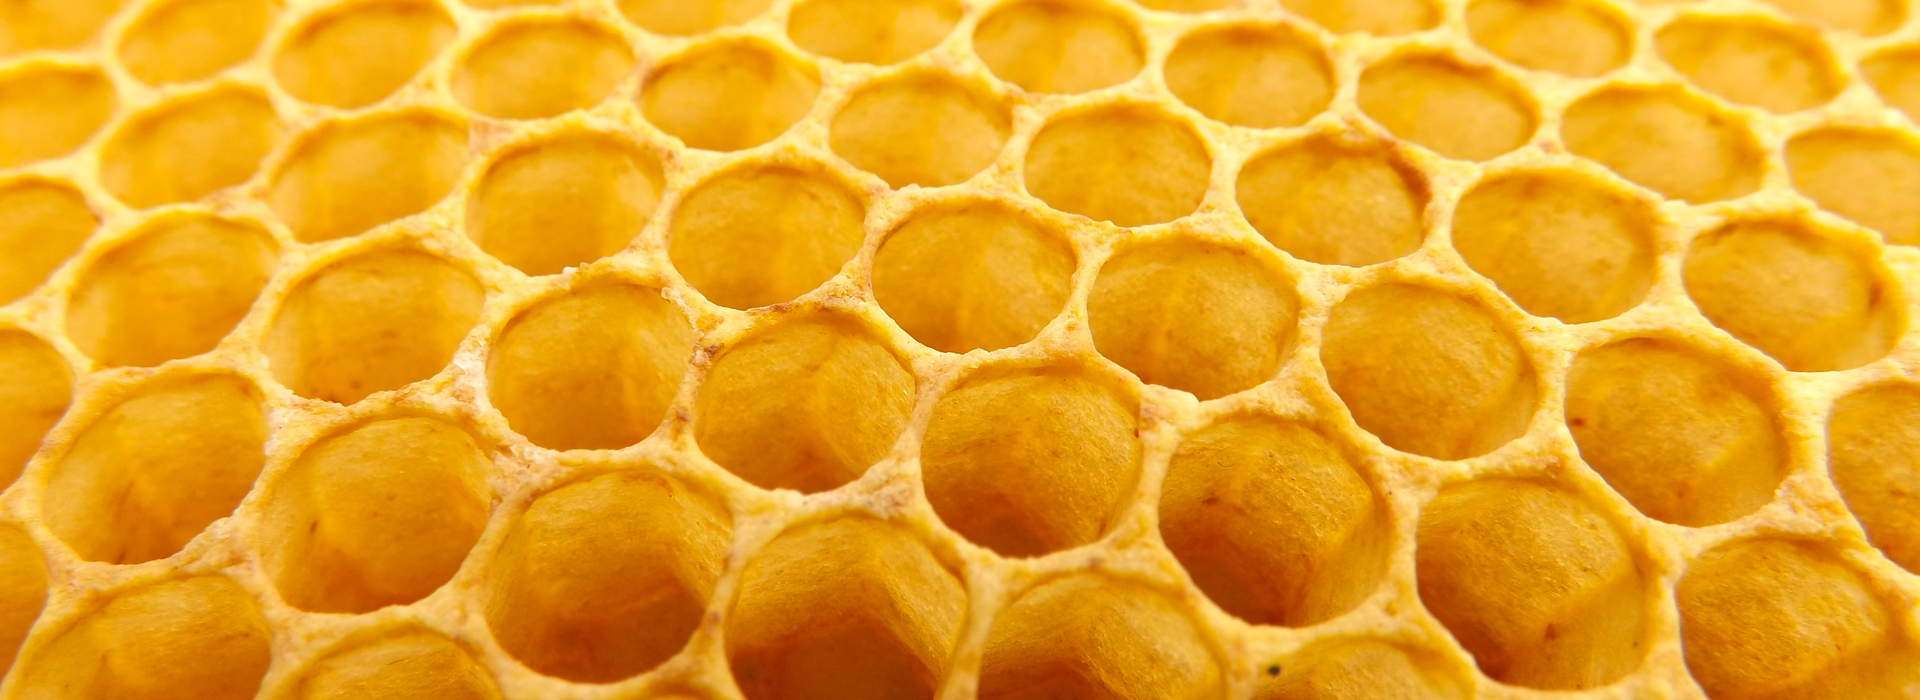 Modulistica per l'apicoltore